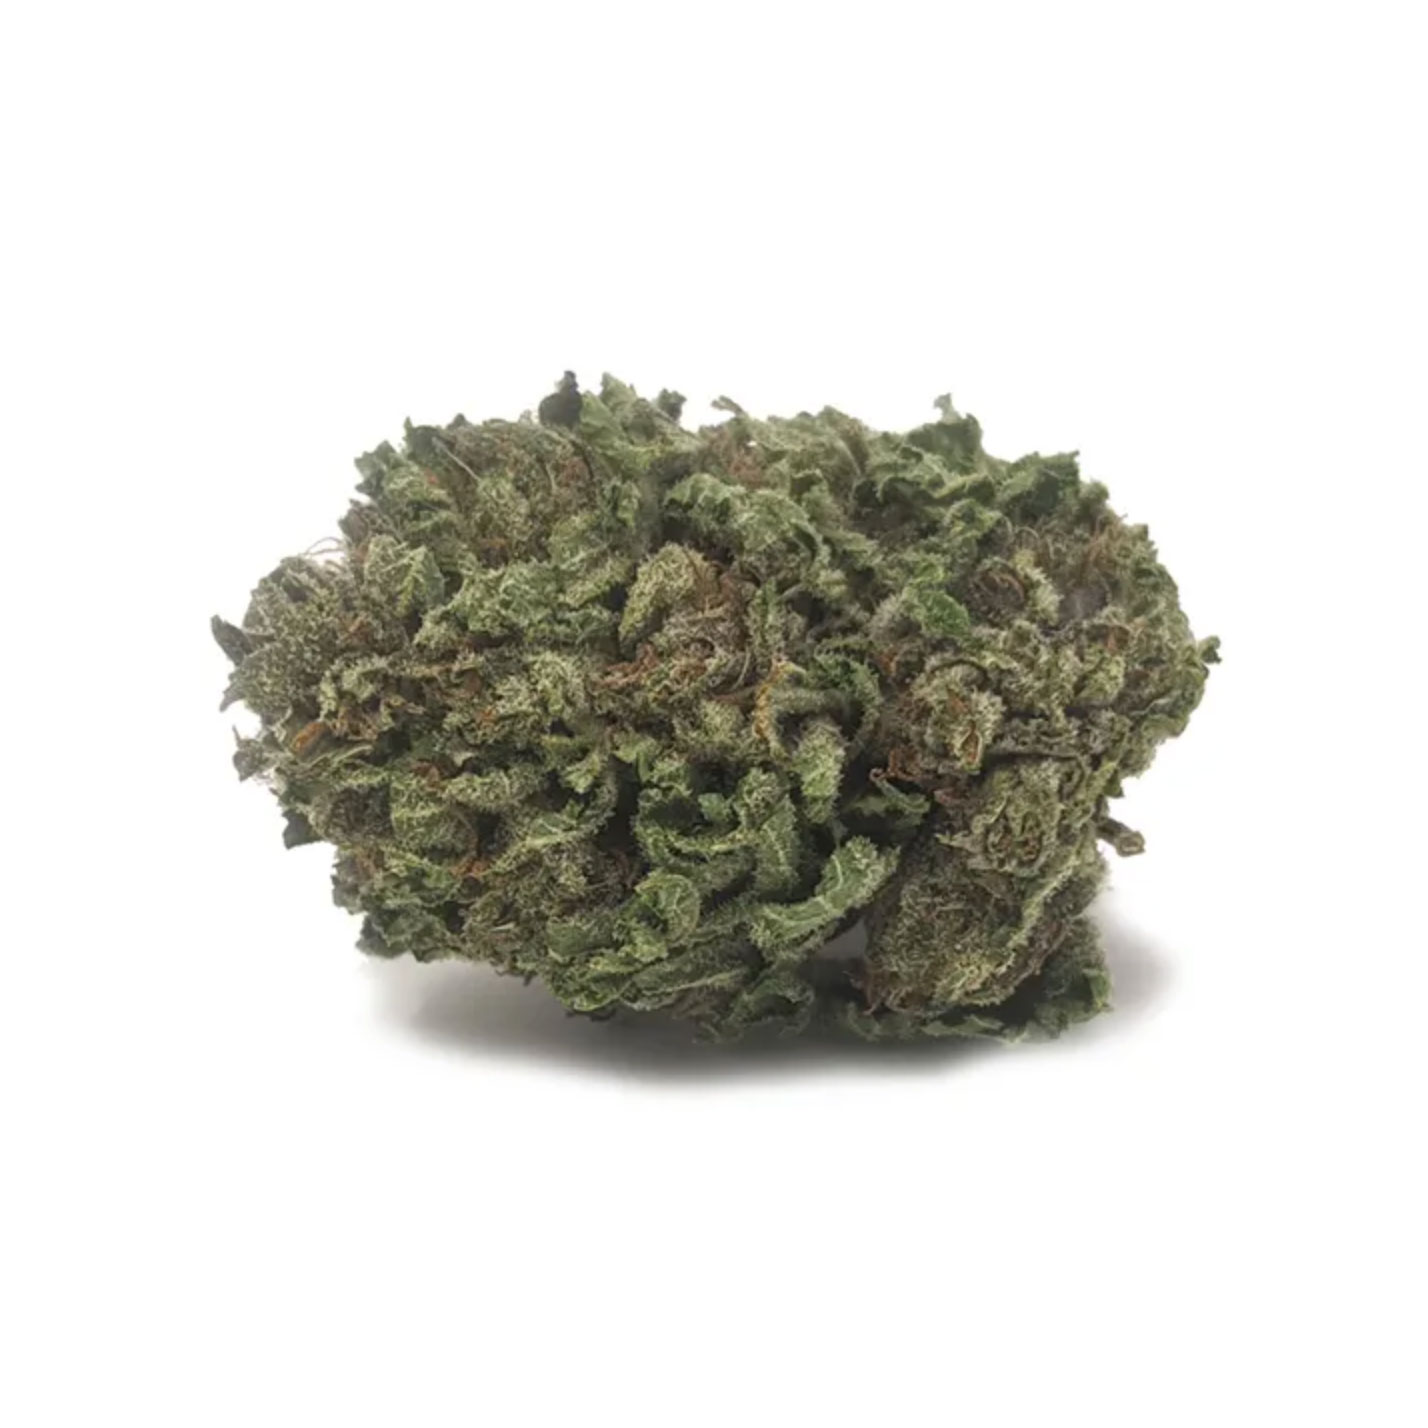 Chemdawg 91 hybrid marijuana nugget from hotgrass.ca